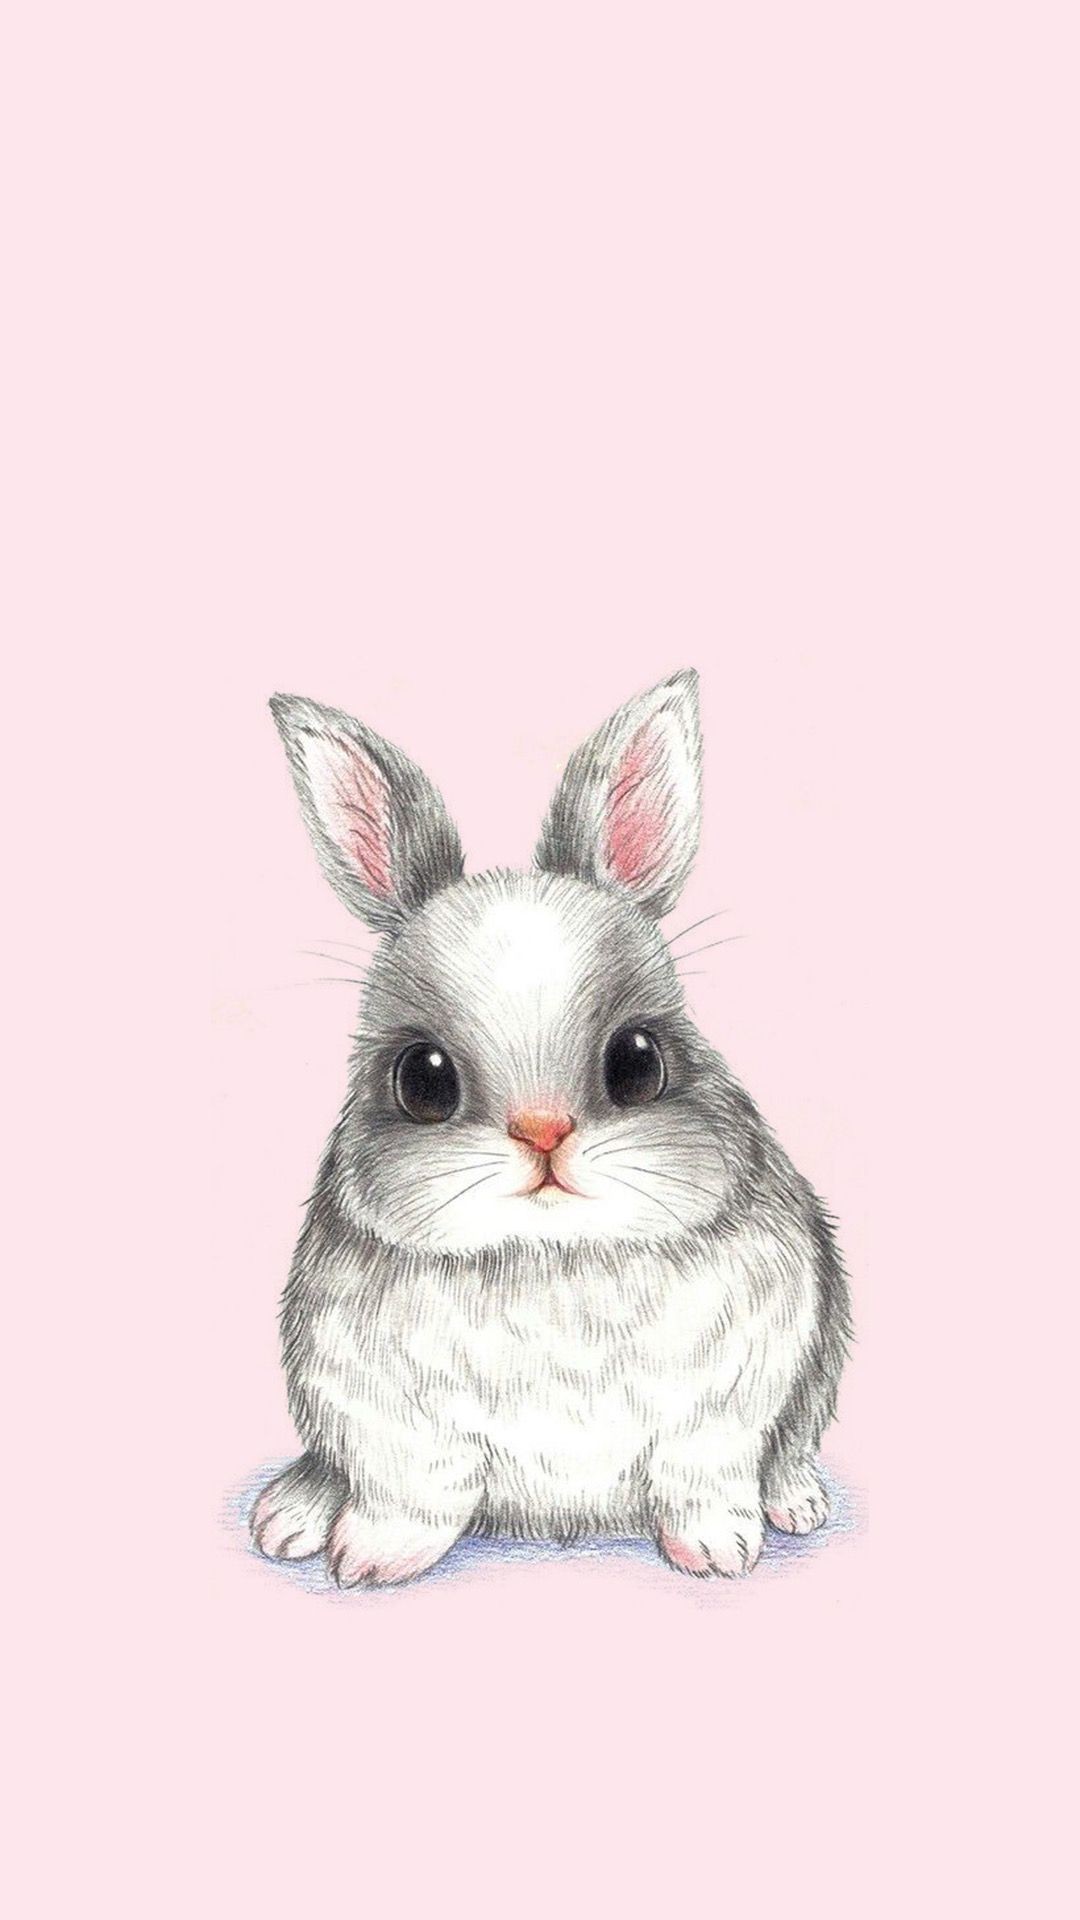 1080x1920 Bunny rabbit phone wallpaper